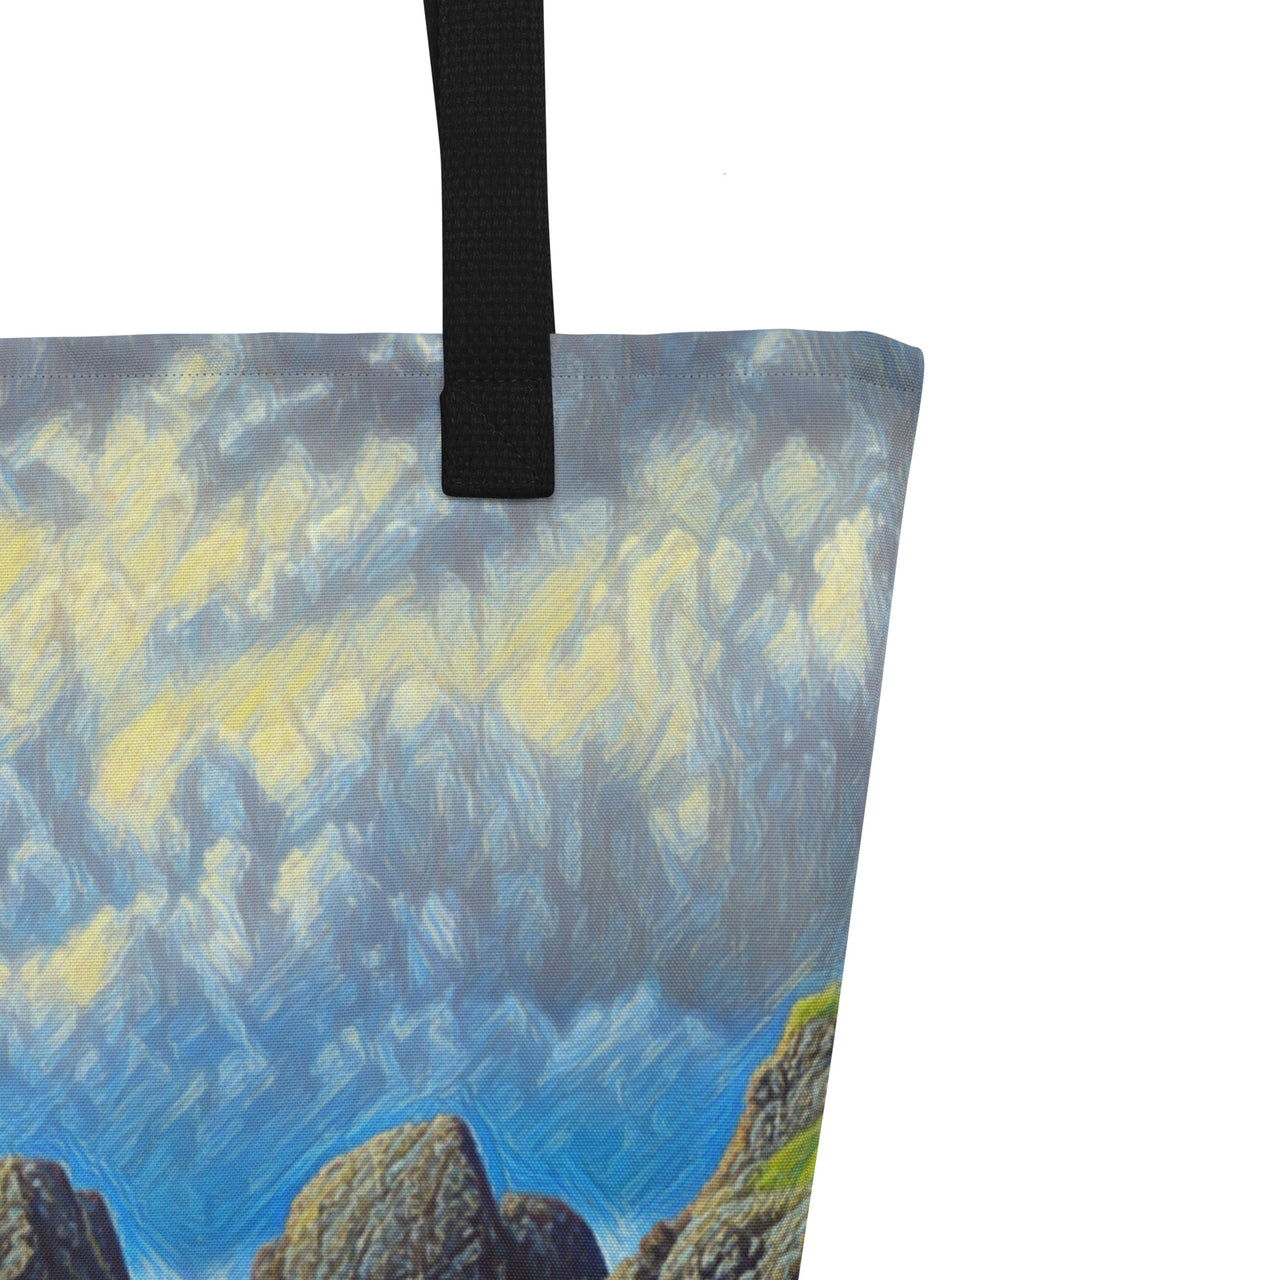 Oregon Coast - Digital Art - Large Tote Bag W/Pocket